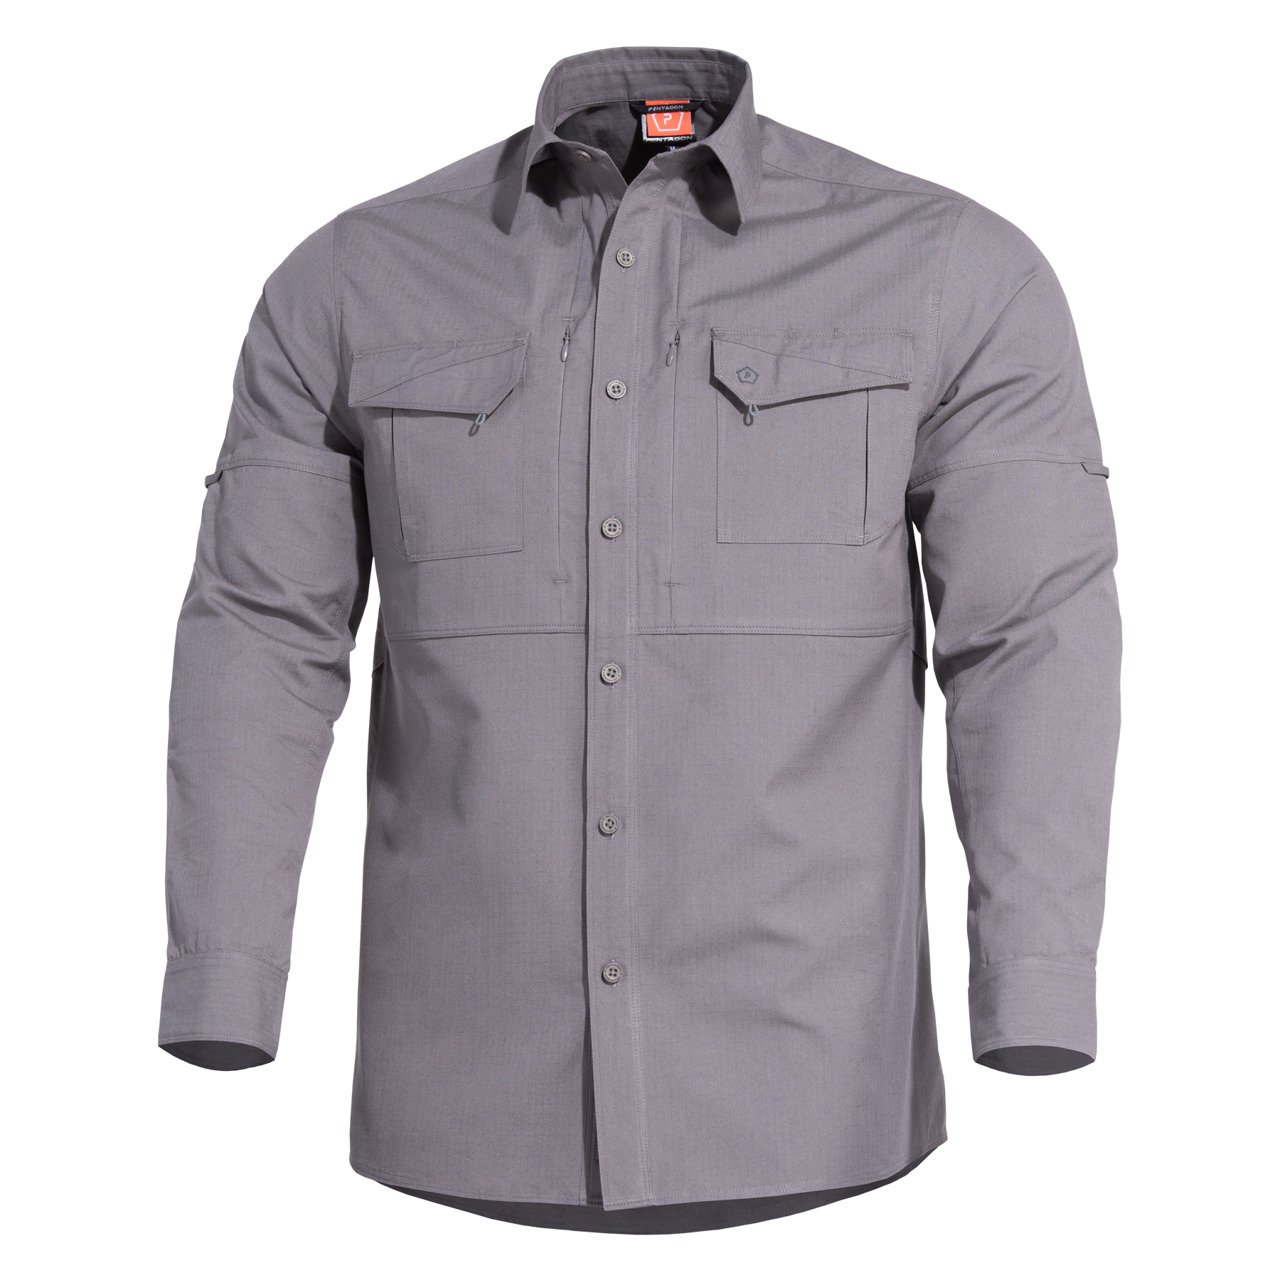 Plato shirt - grey Gray | Apparel \ Shirts \ Other Shirts ...